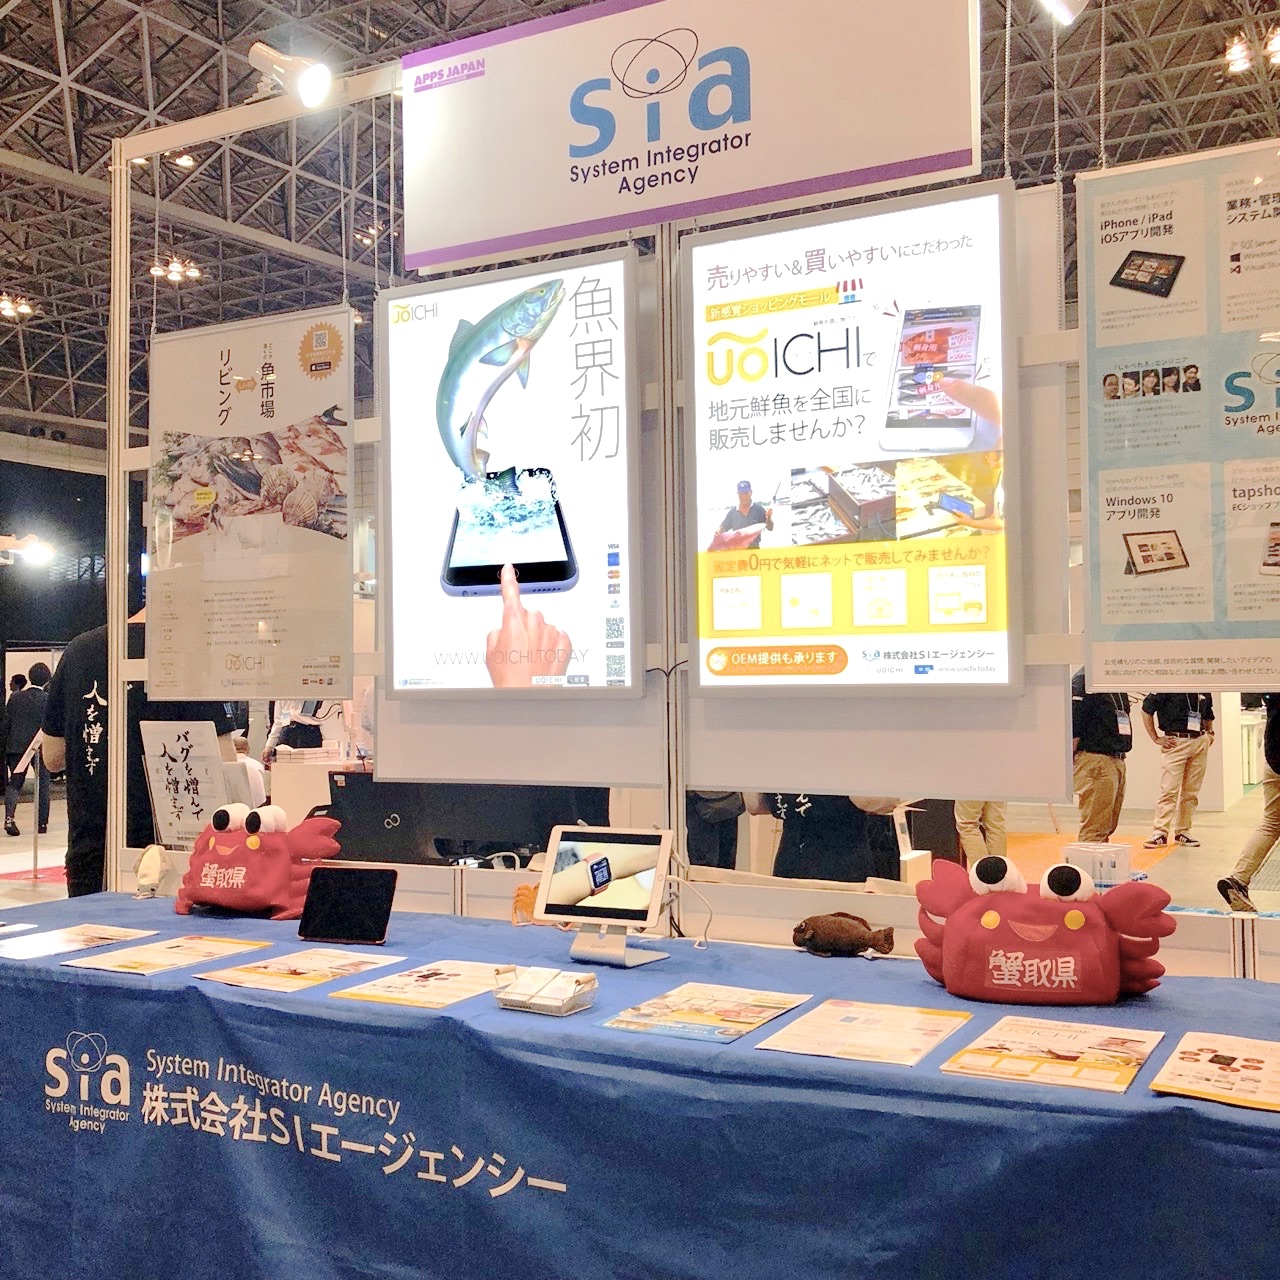 APPS JAPAN 展示会 システム開発 UOICHI 鮮魚販売